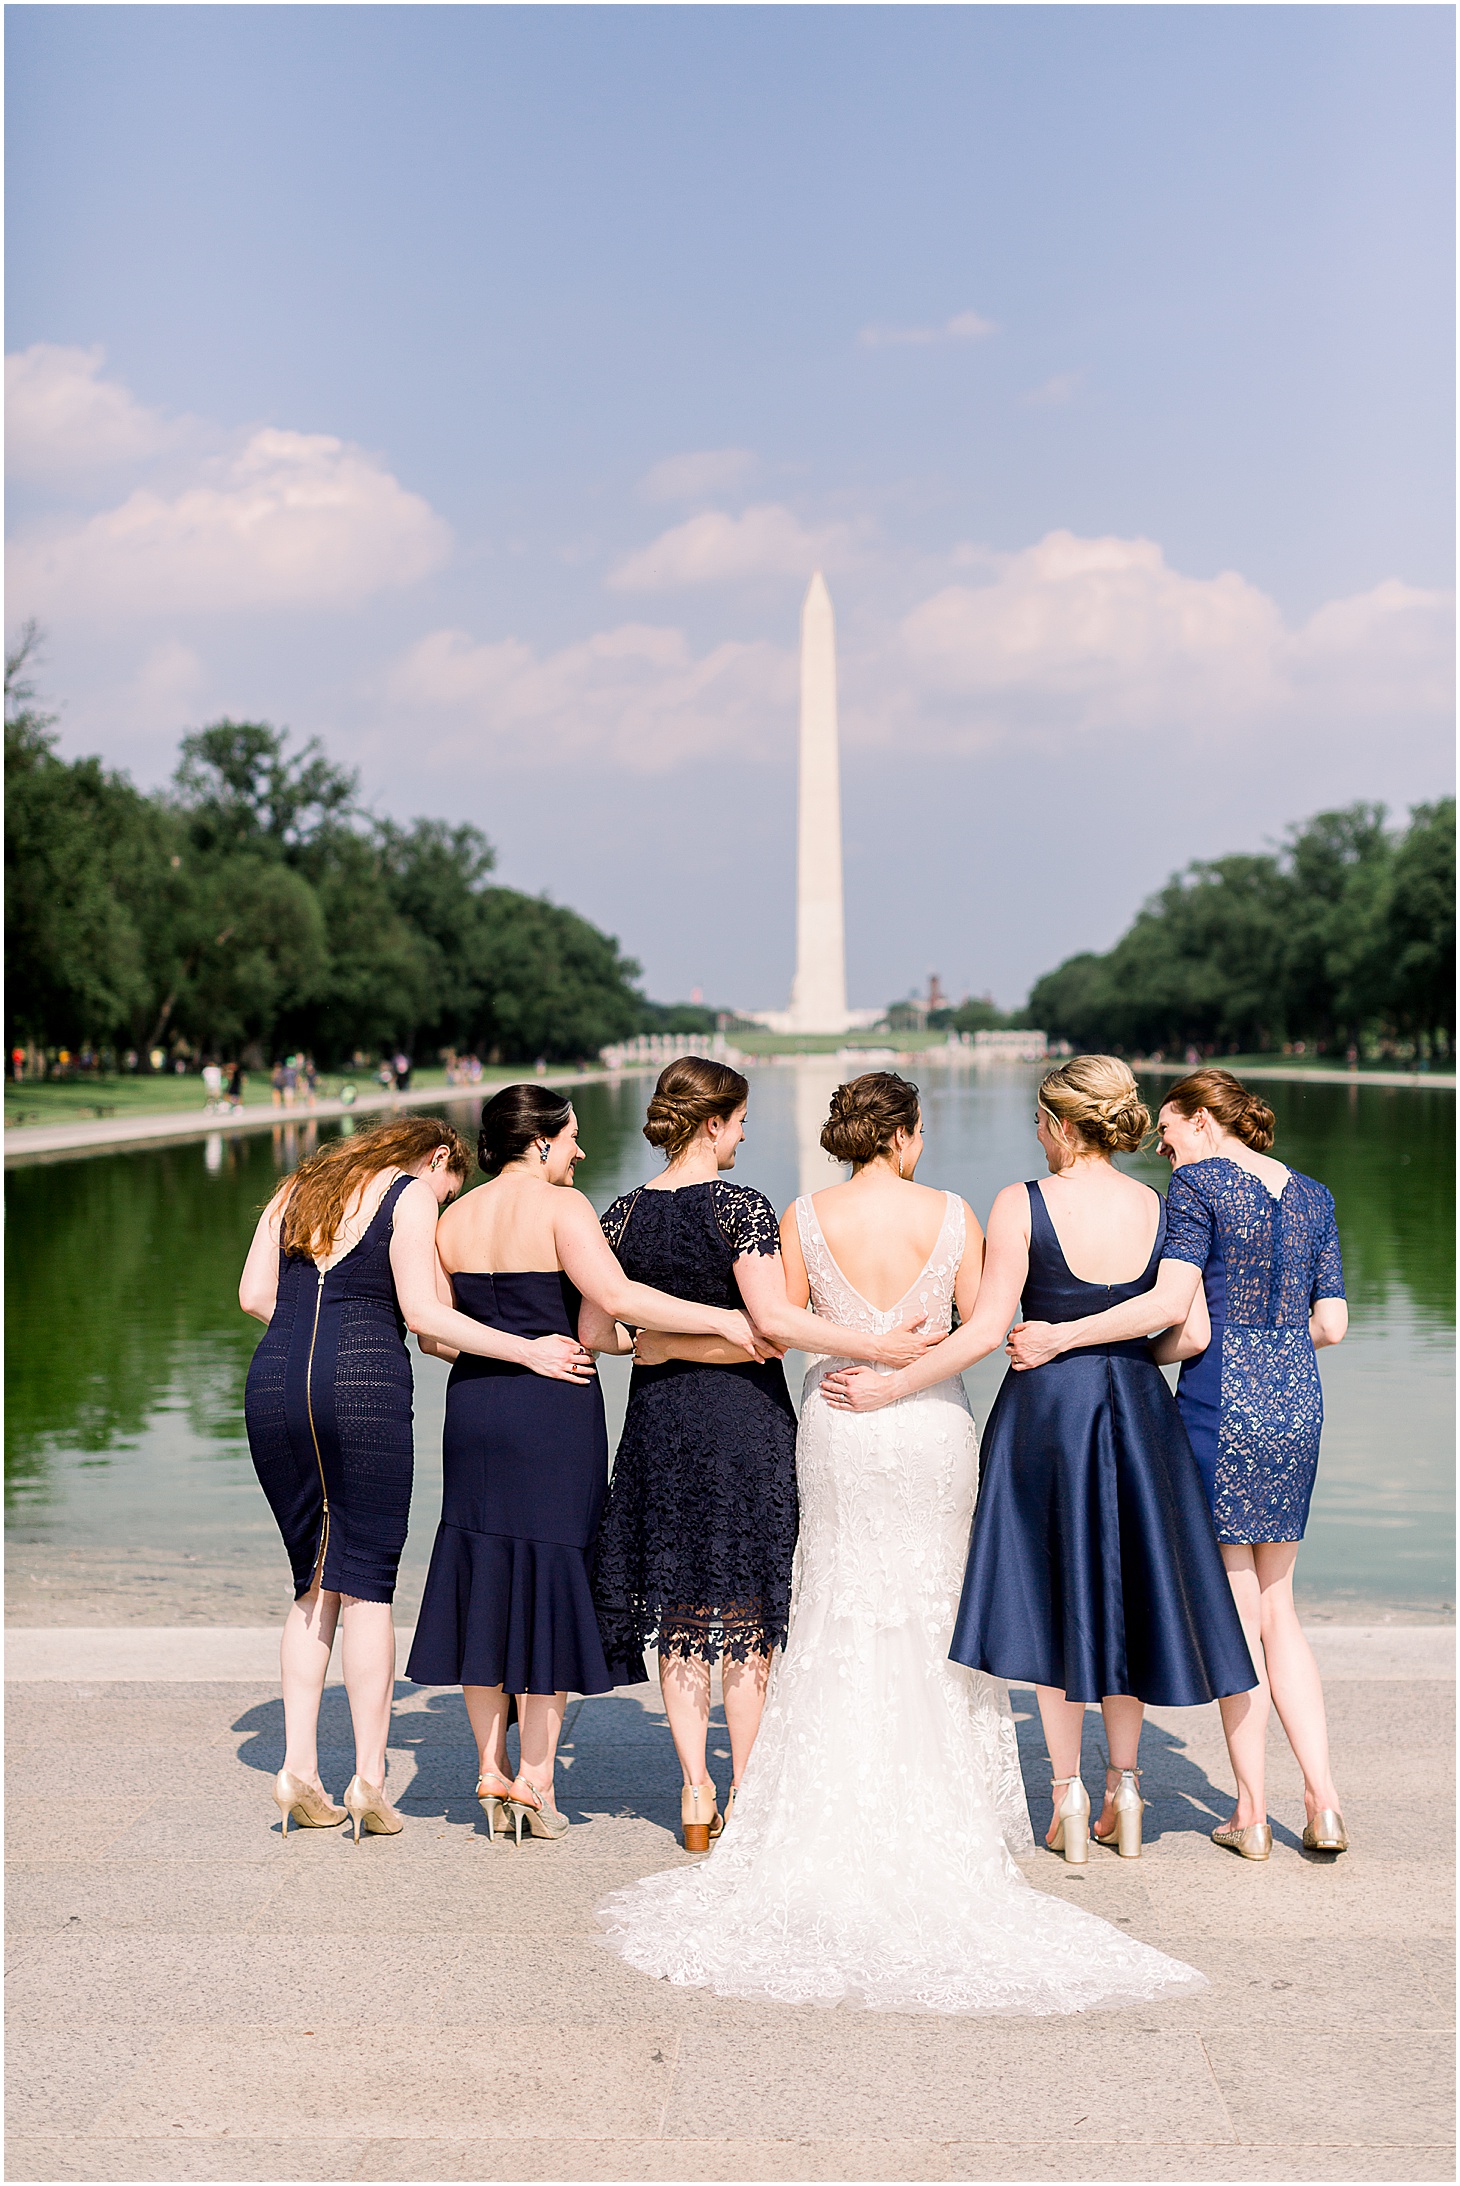 Bridal Party at Lincoln Memorial Reflecting Pool in DC, Romantic Spring Wedding at Dumbarton House Gardens, Sarah Bradshaw Photography